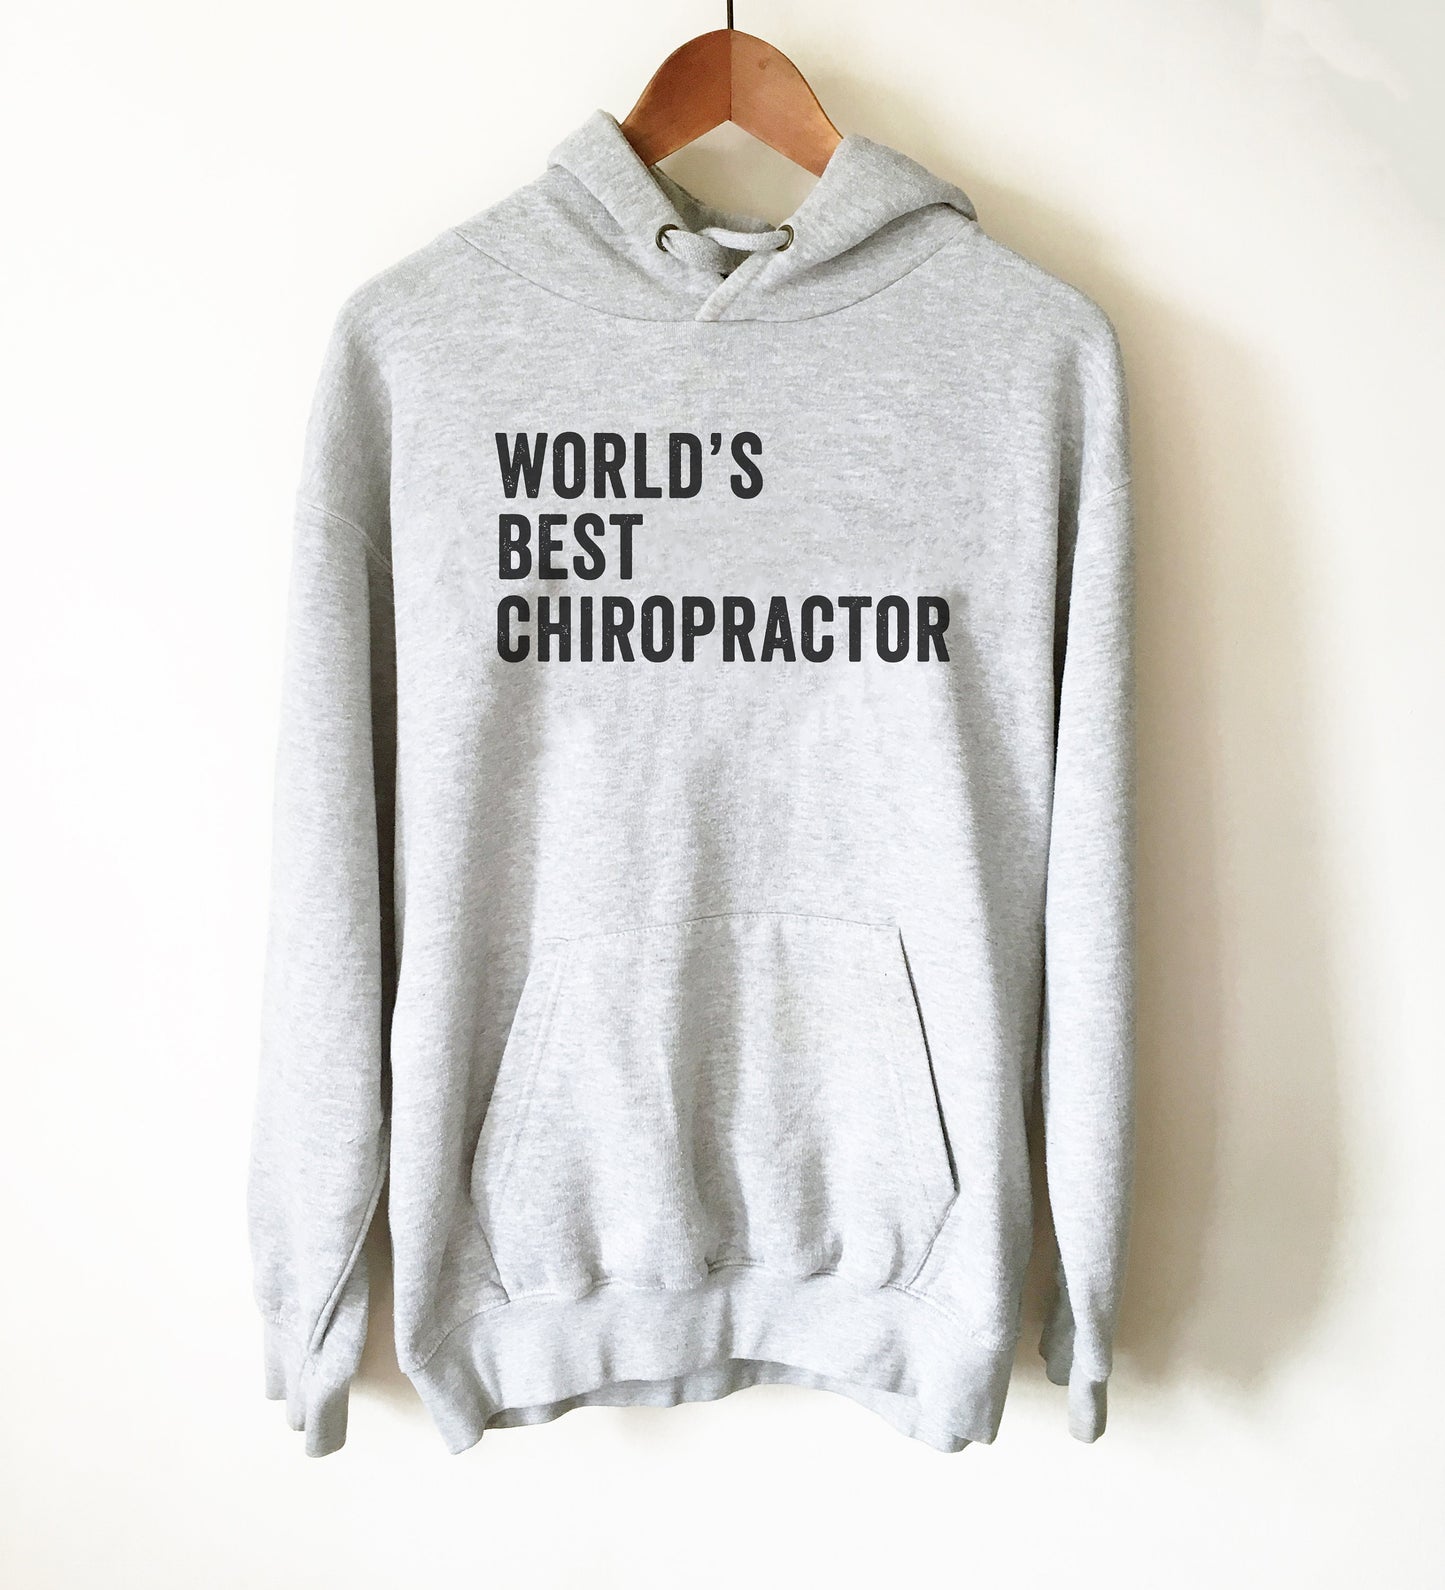 World's Best Chiropractor Hoodie - Chiropractor Shirt, Chiropractor Gift, Chiropractor Student, Chiropractic Gift, Gift For Coworker